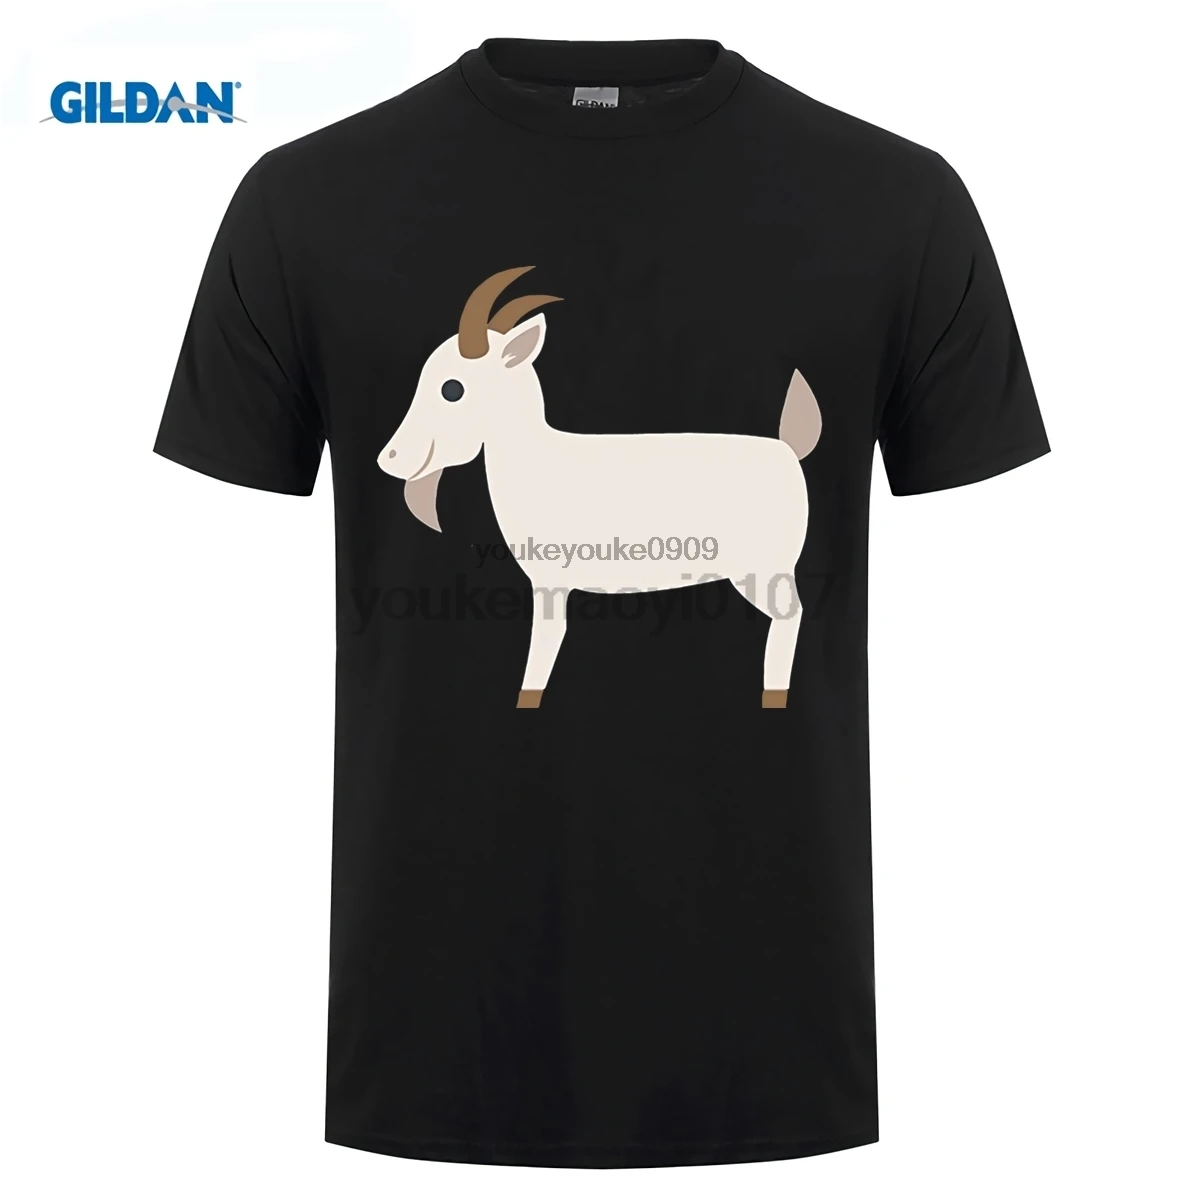 Gildan ヤギ絵文字 Tシャツ家畜ホーン牙豚羊牛スタイル男性半袖 Tシャツ男性のセクシーな Tシャツ Tシャツ Aliexpress